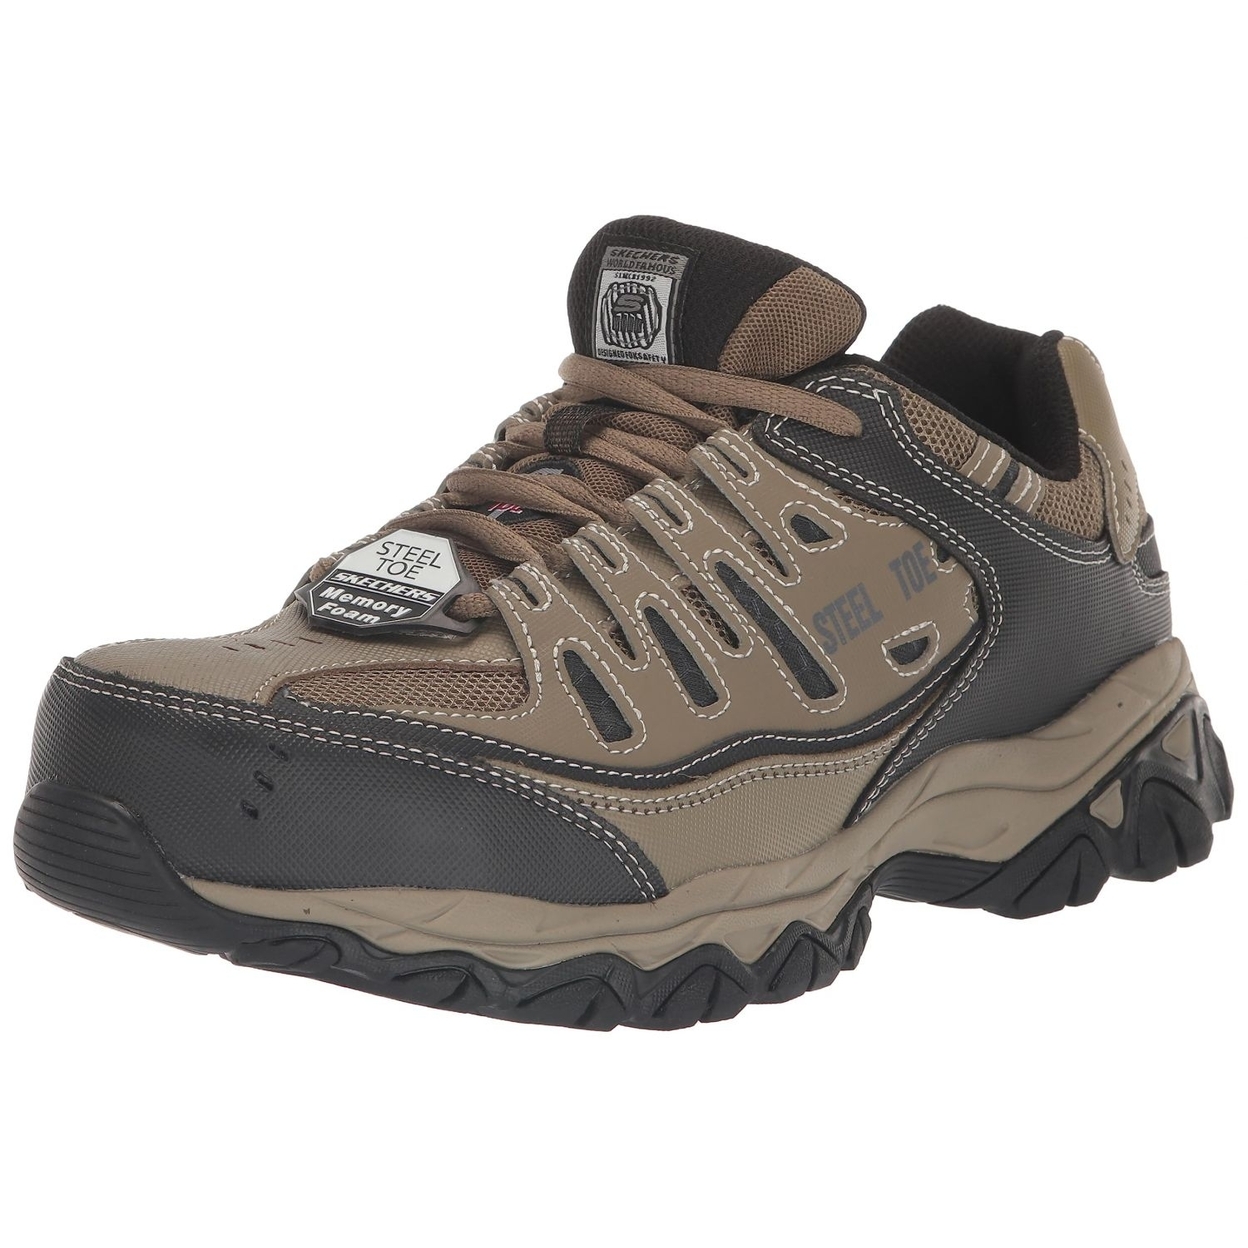 Skechers Men's Cankton-U Industrial Shoe 7 BLACK/CHARCOAL - BLACK/CHARCOAL, 9.5 Wide